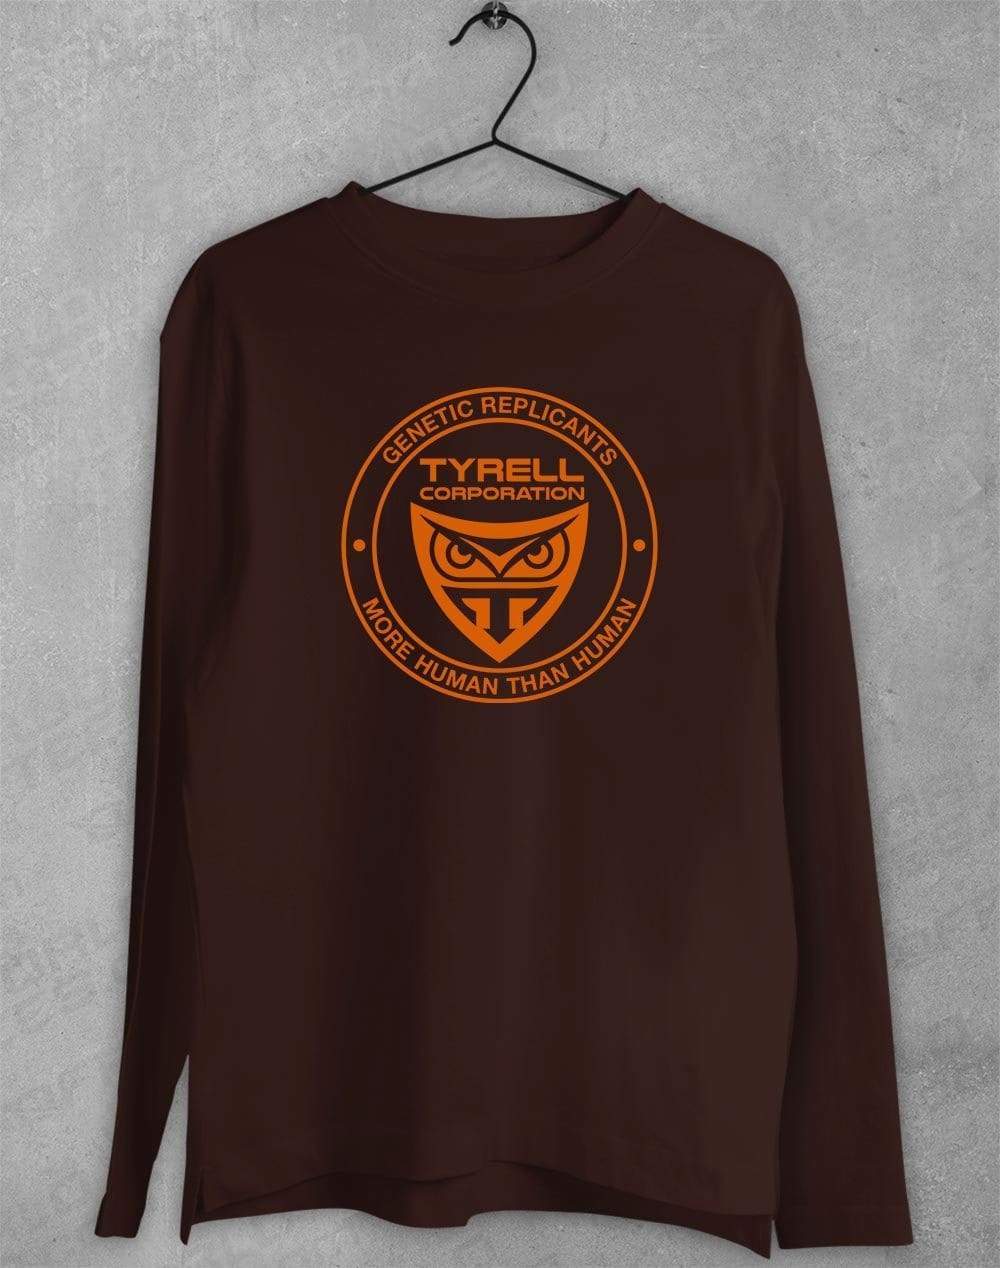 Tyrell Corp Circular Long Sleeve T-Shirt S / Dark Chocolate  - Off World Tees